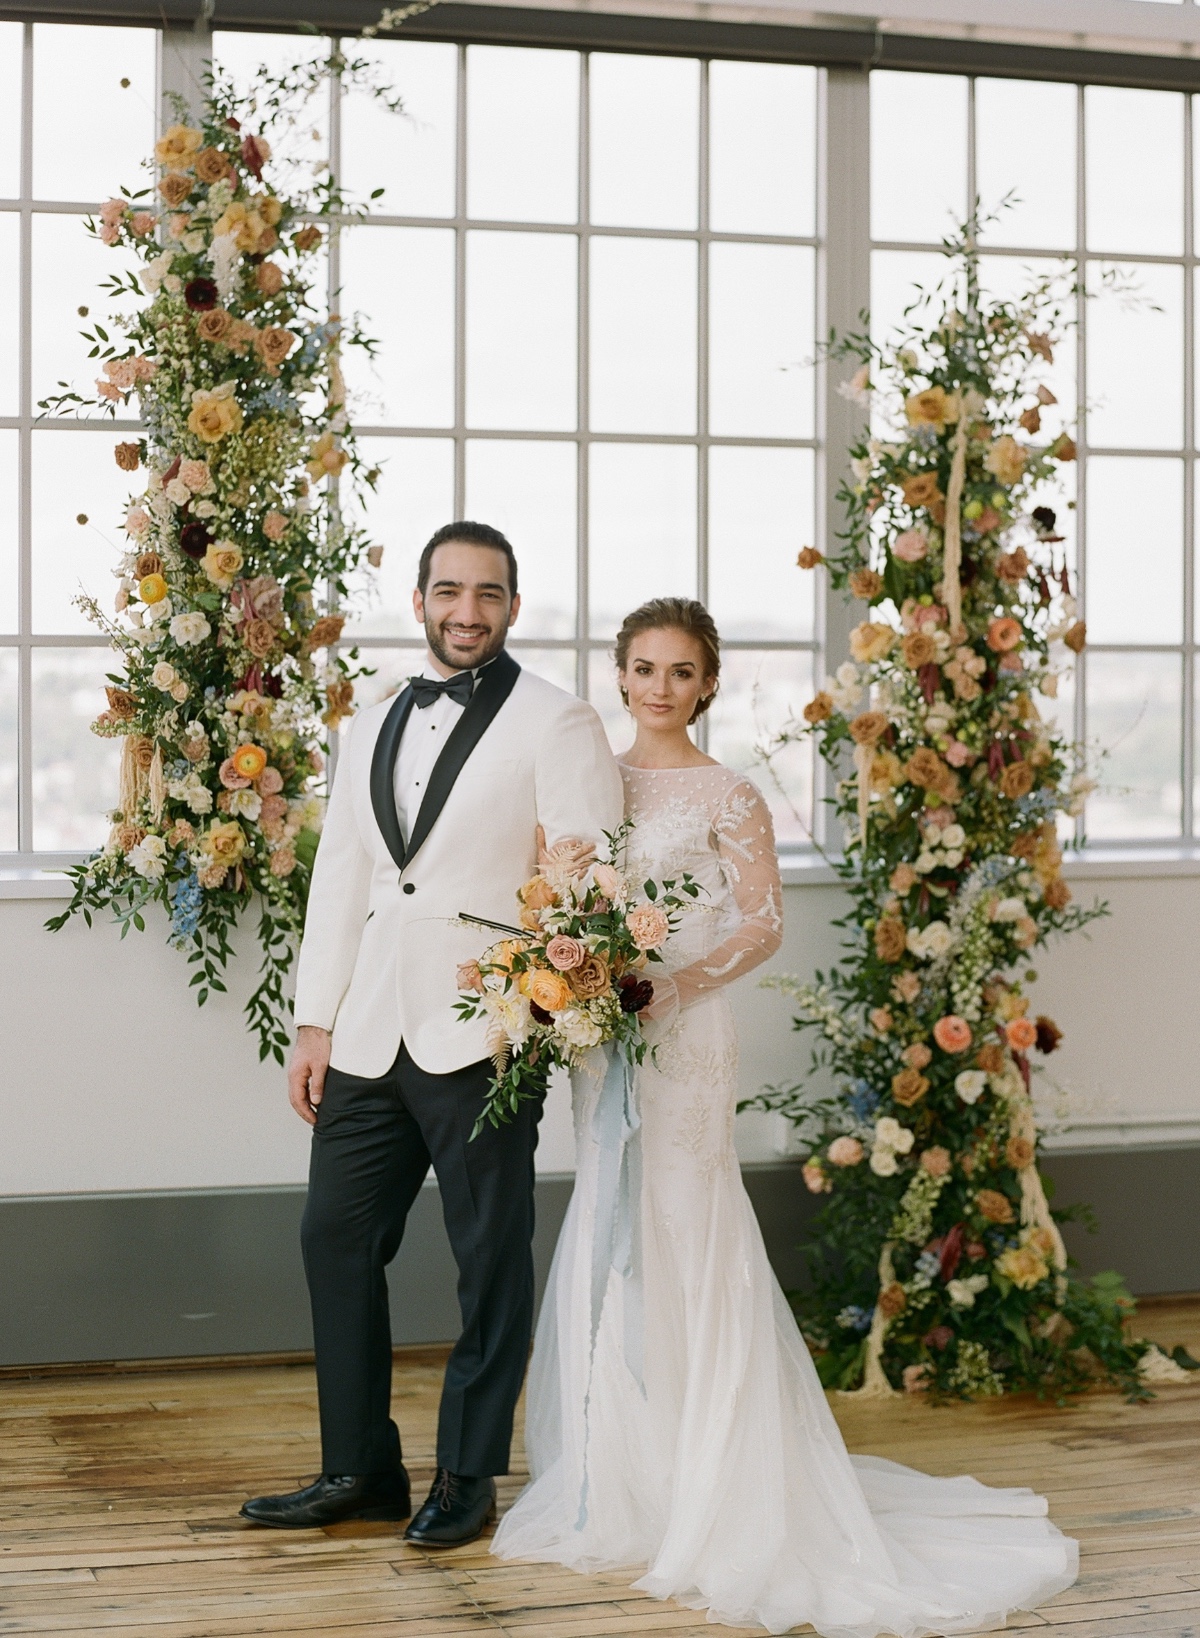 Flower wedding backdrop at warehouse wedding